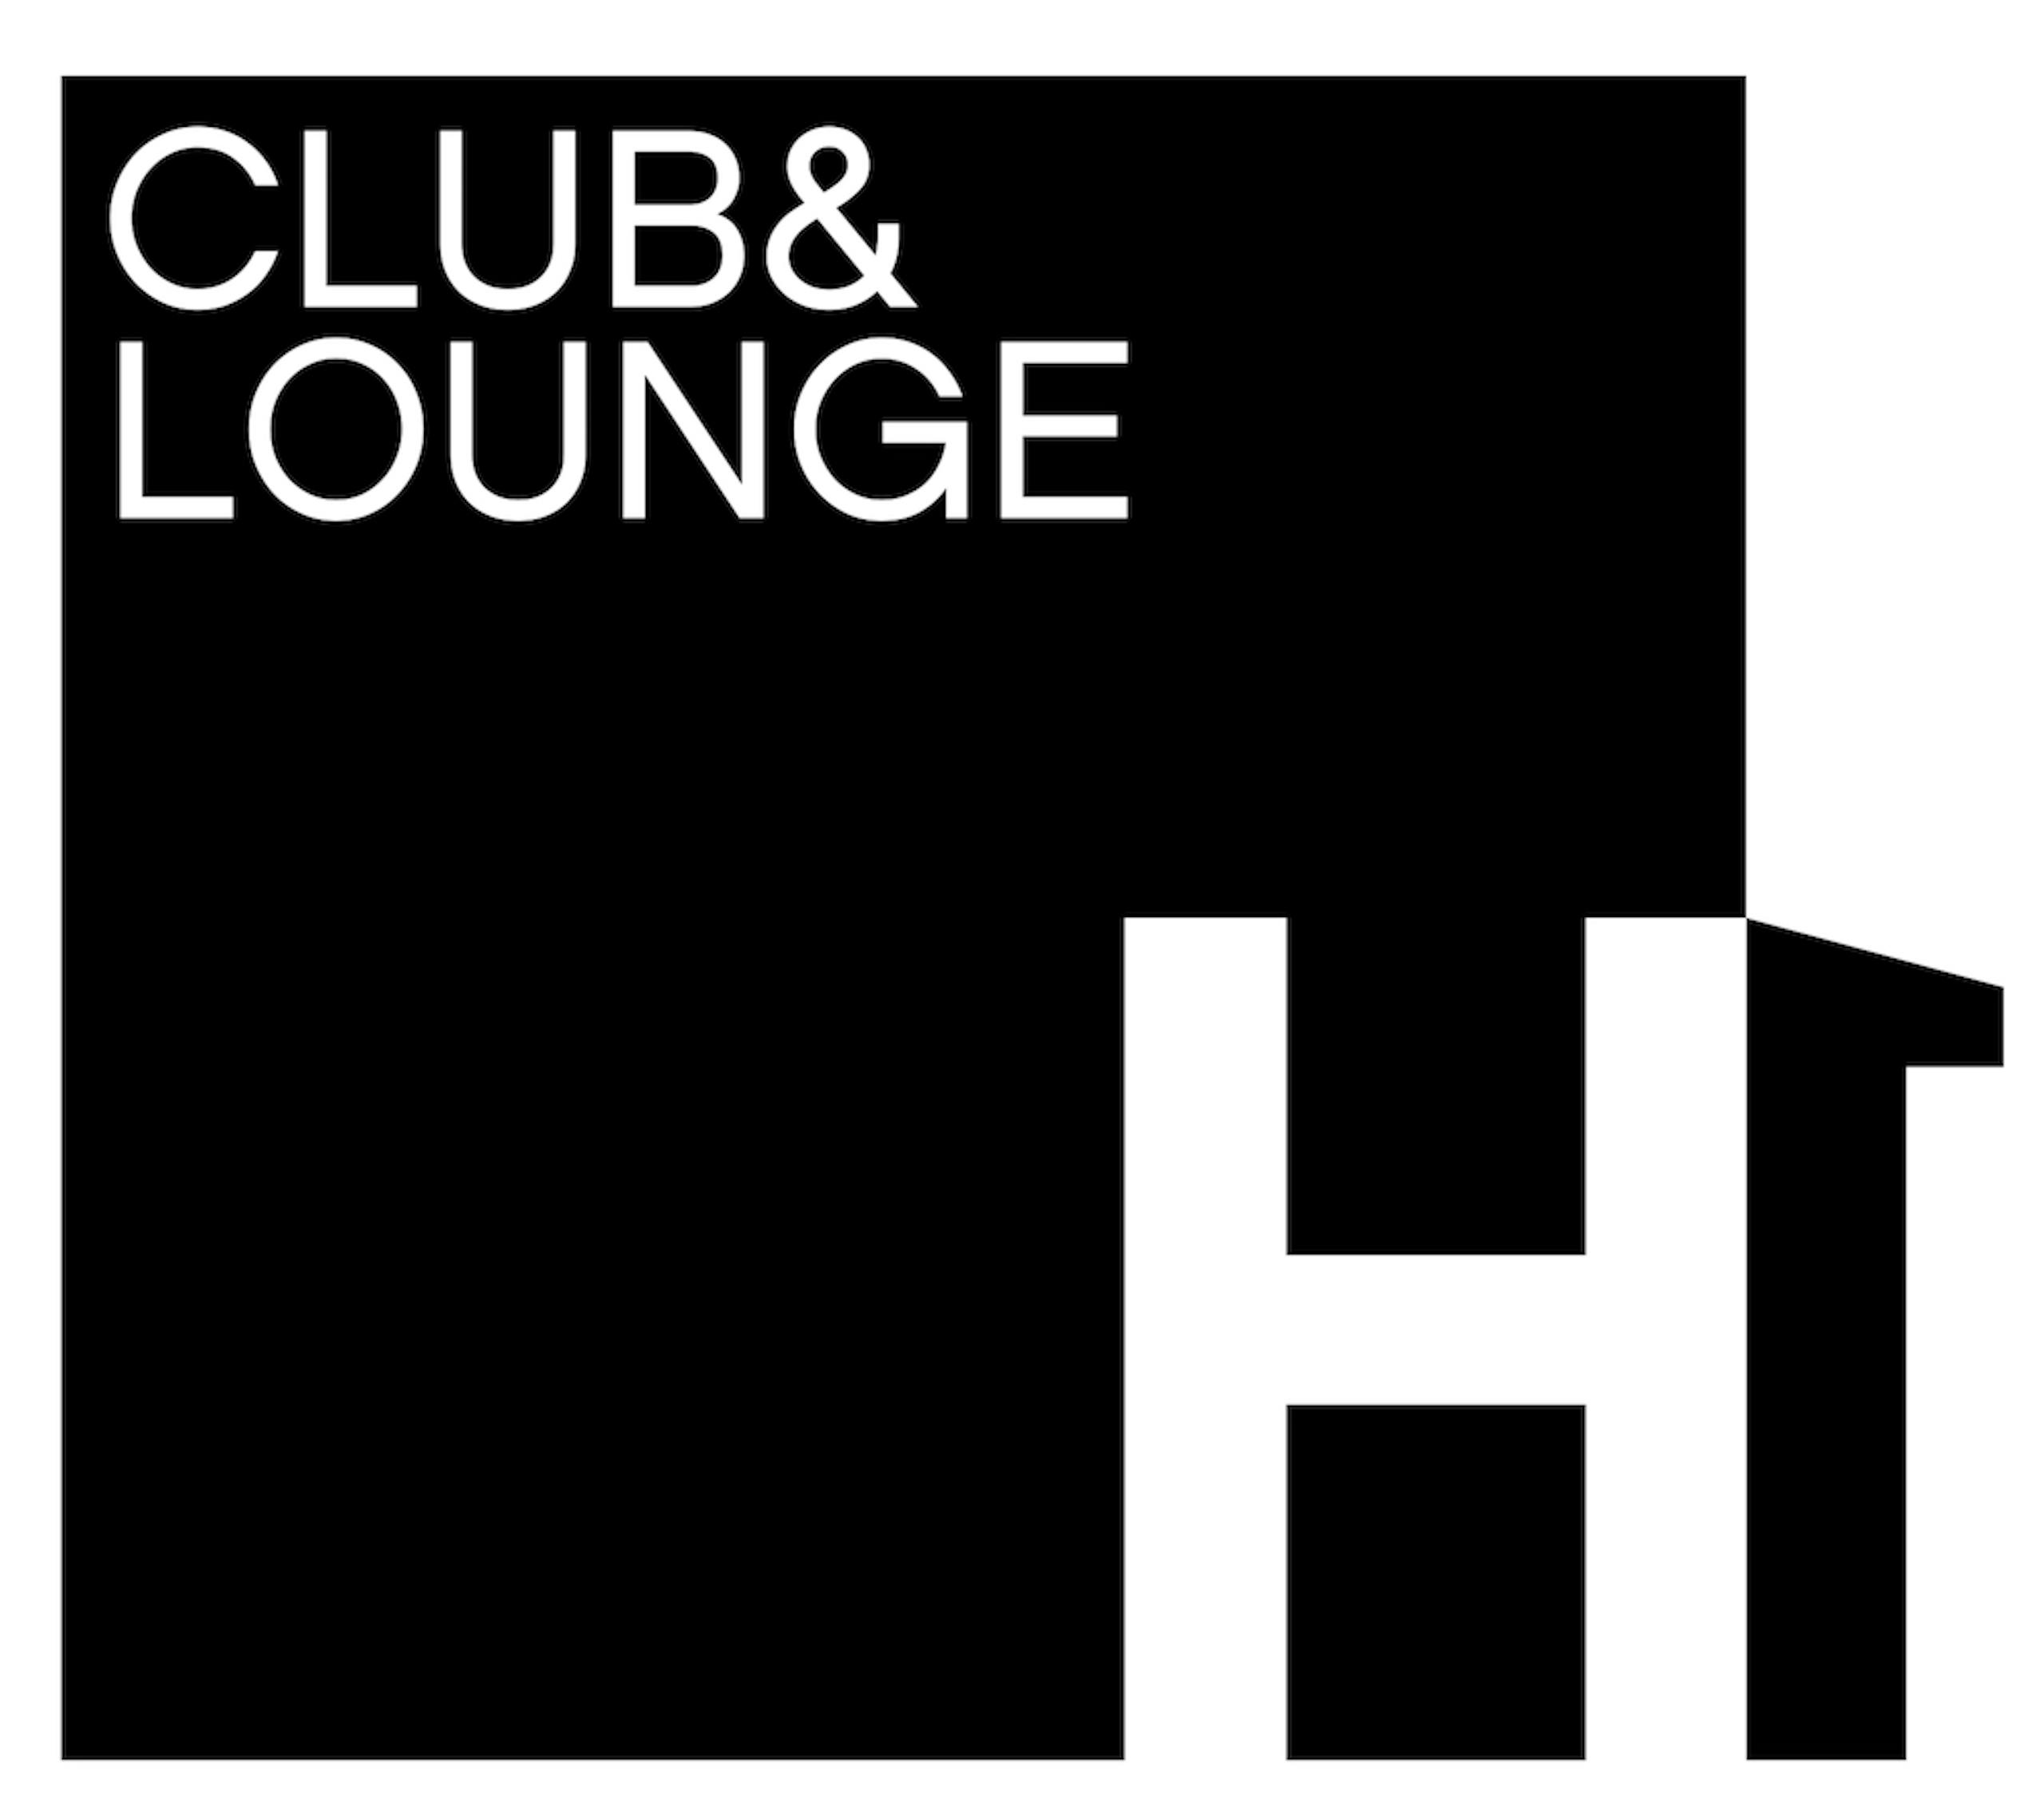 H1 Club & Lounge